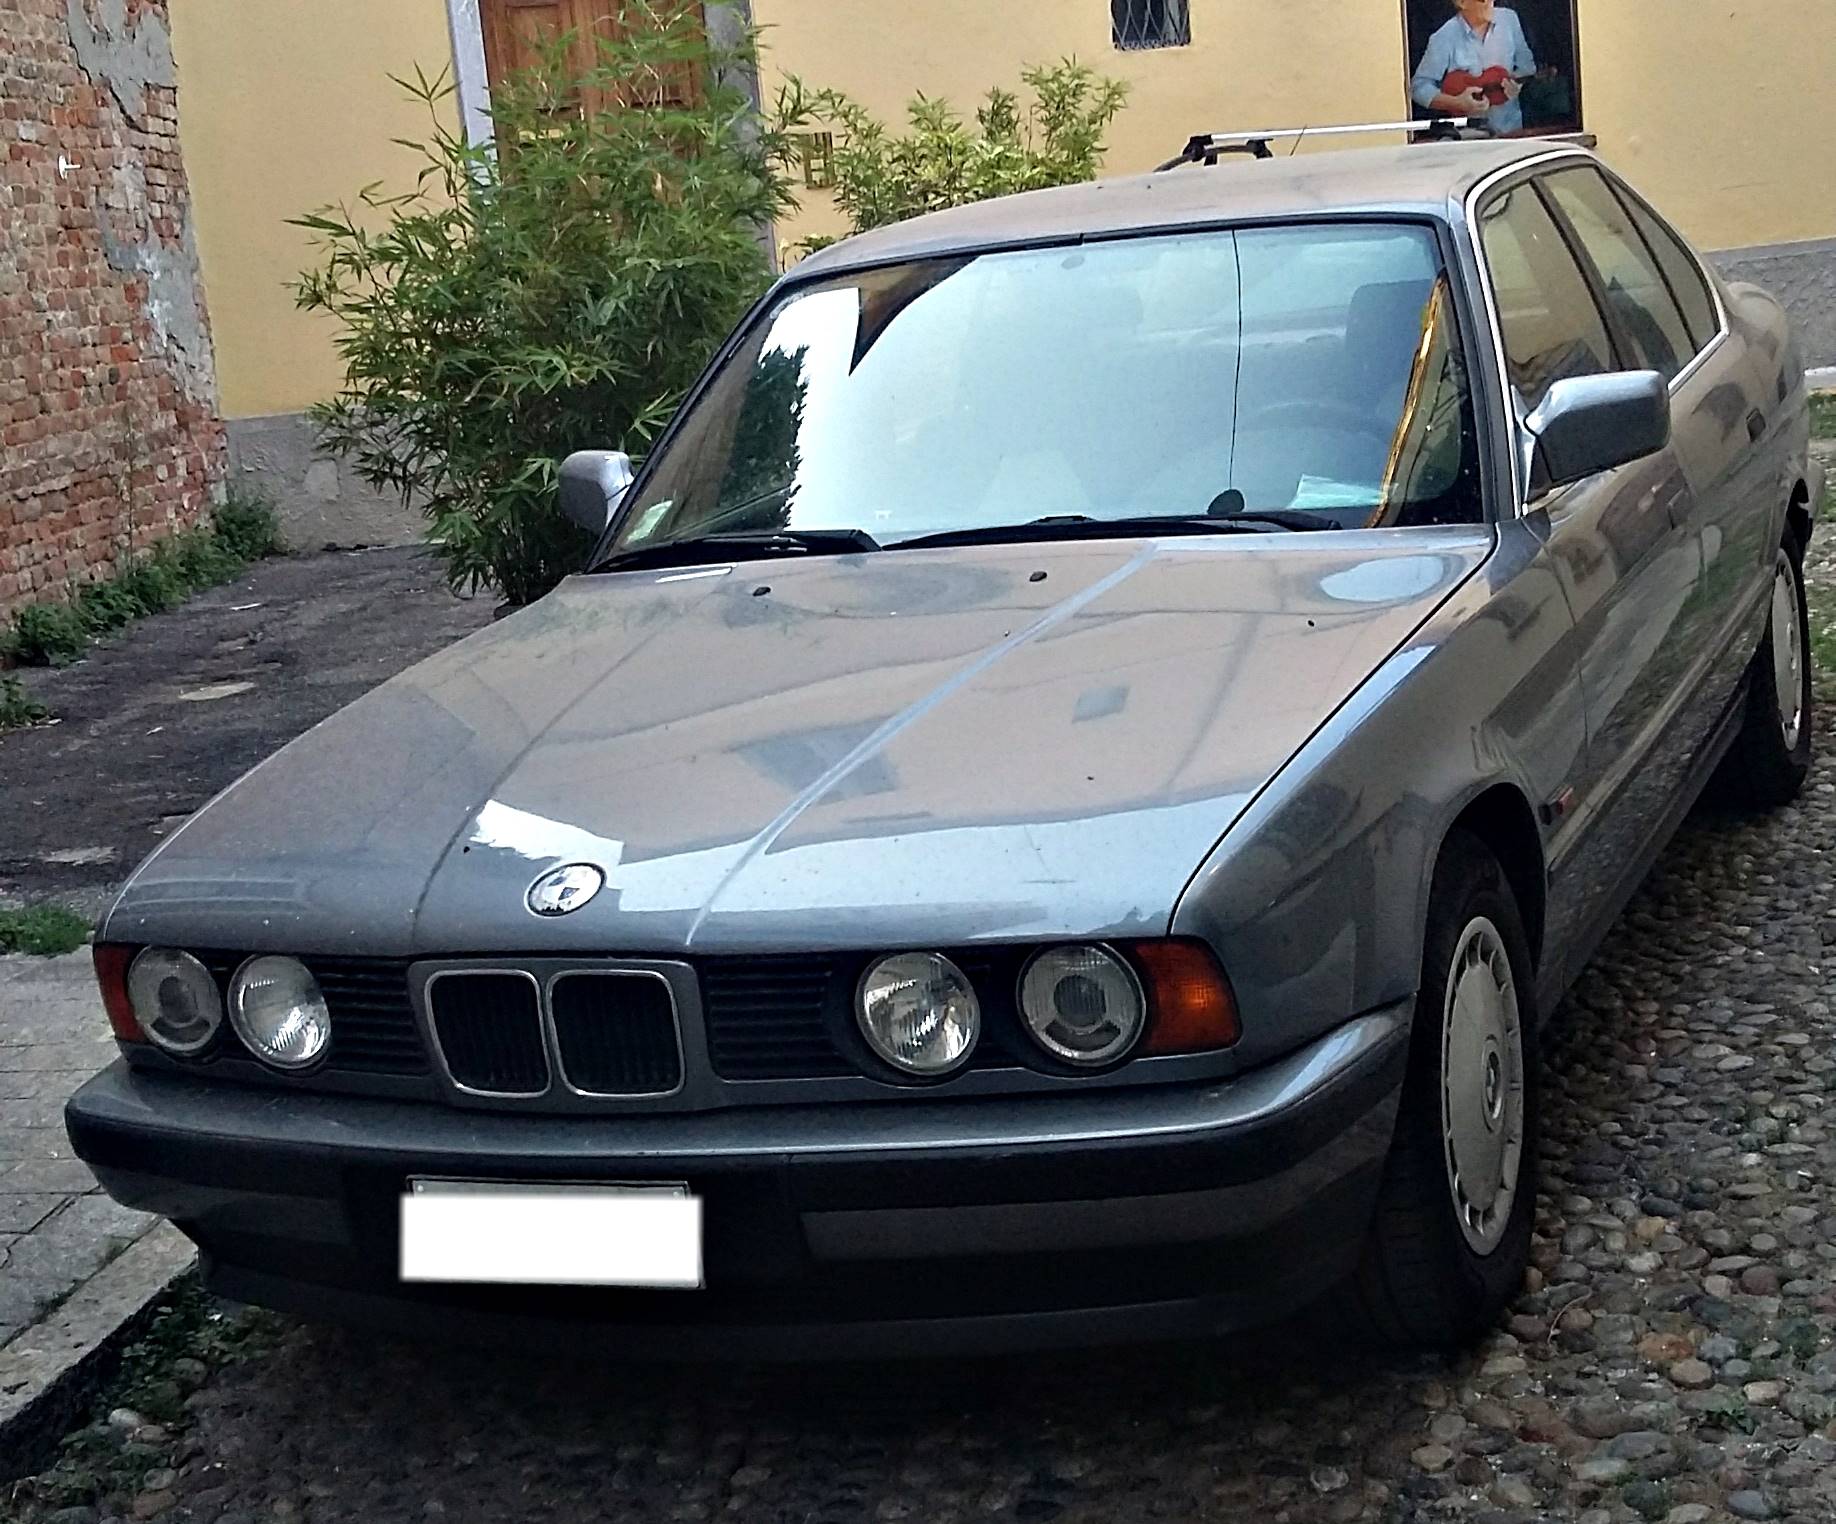 File:BMW E34 525i.JPG - Wikimedia Commons